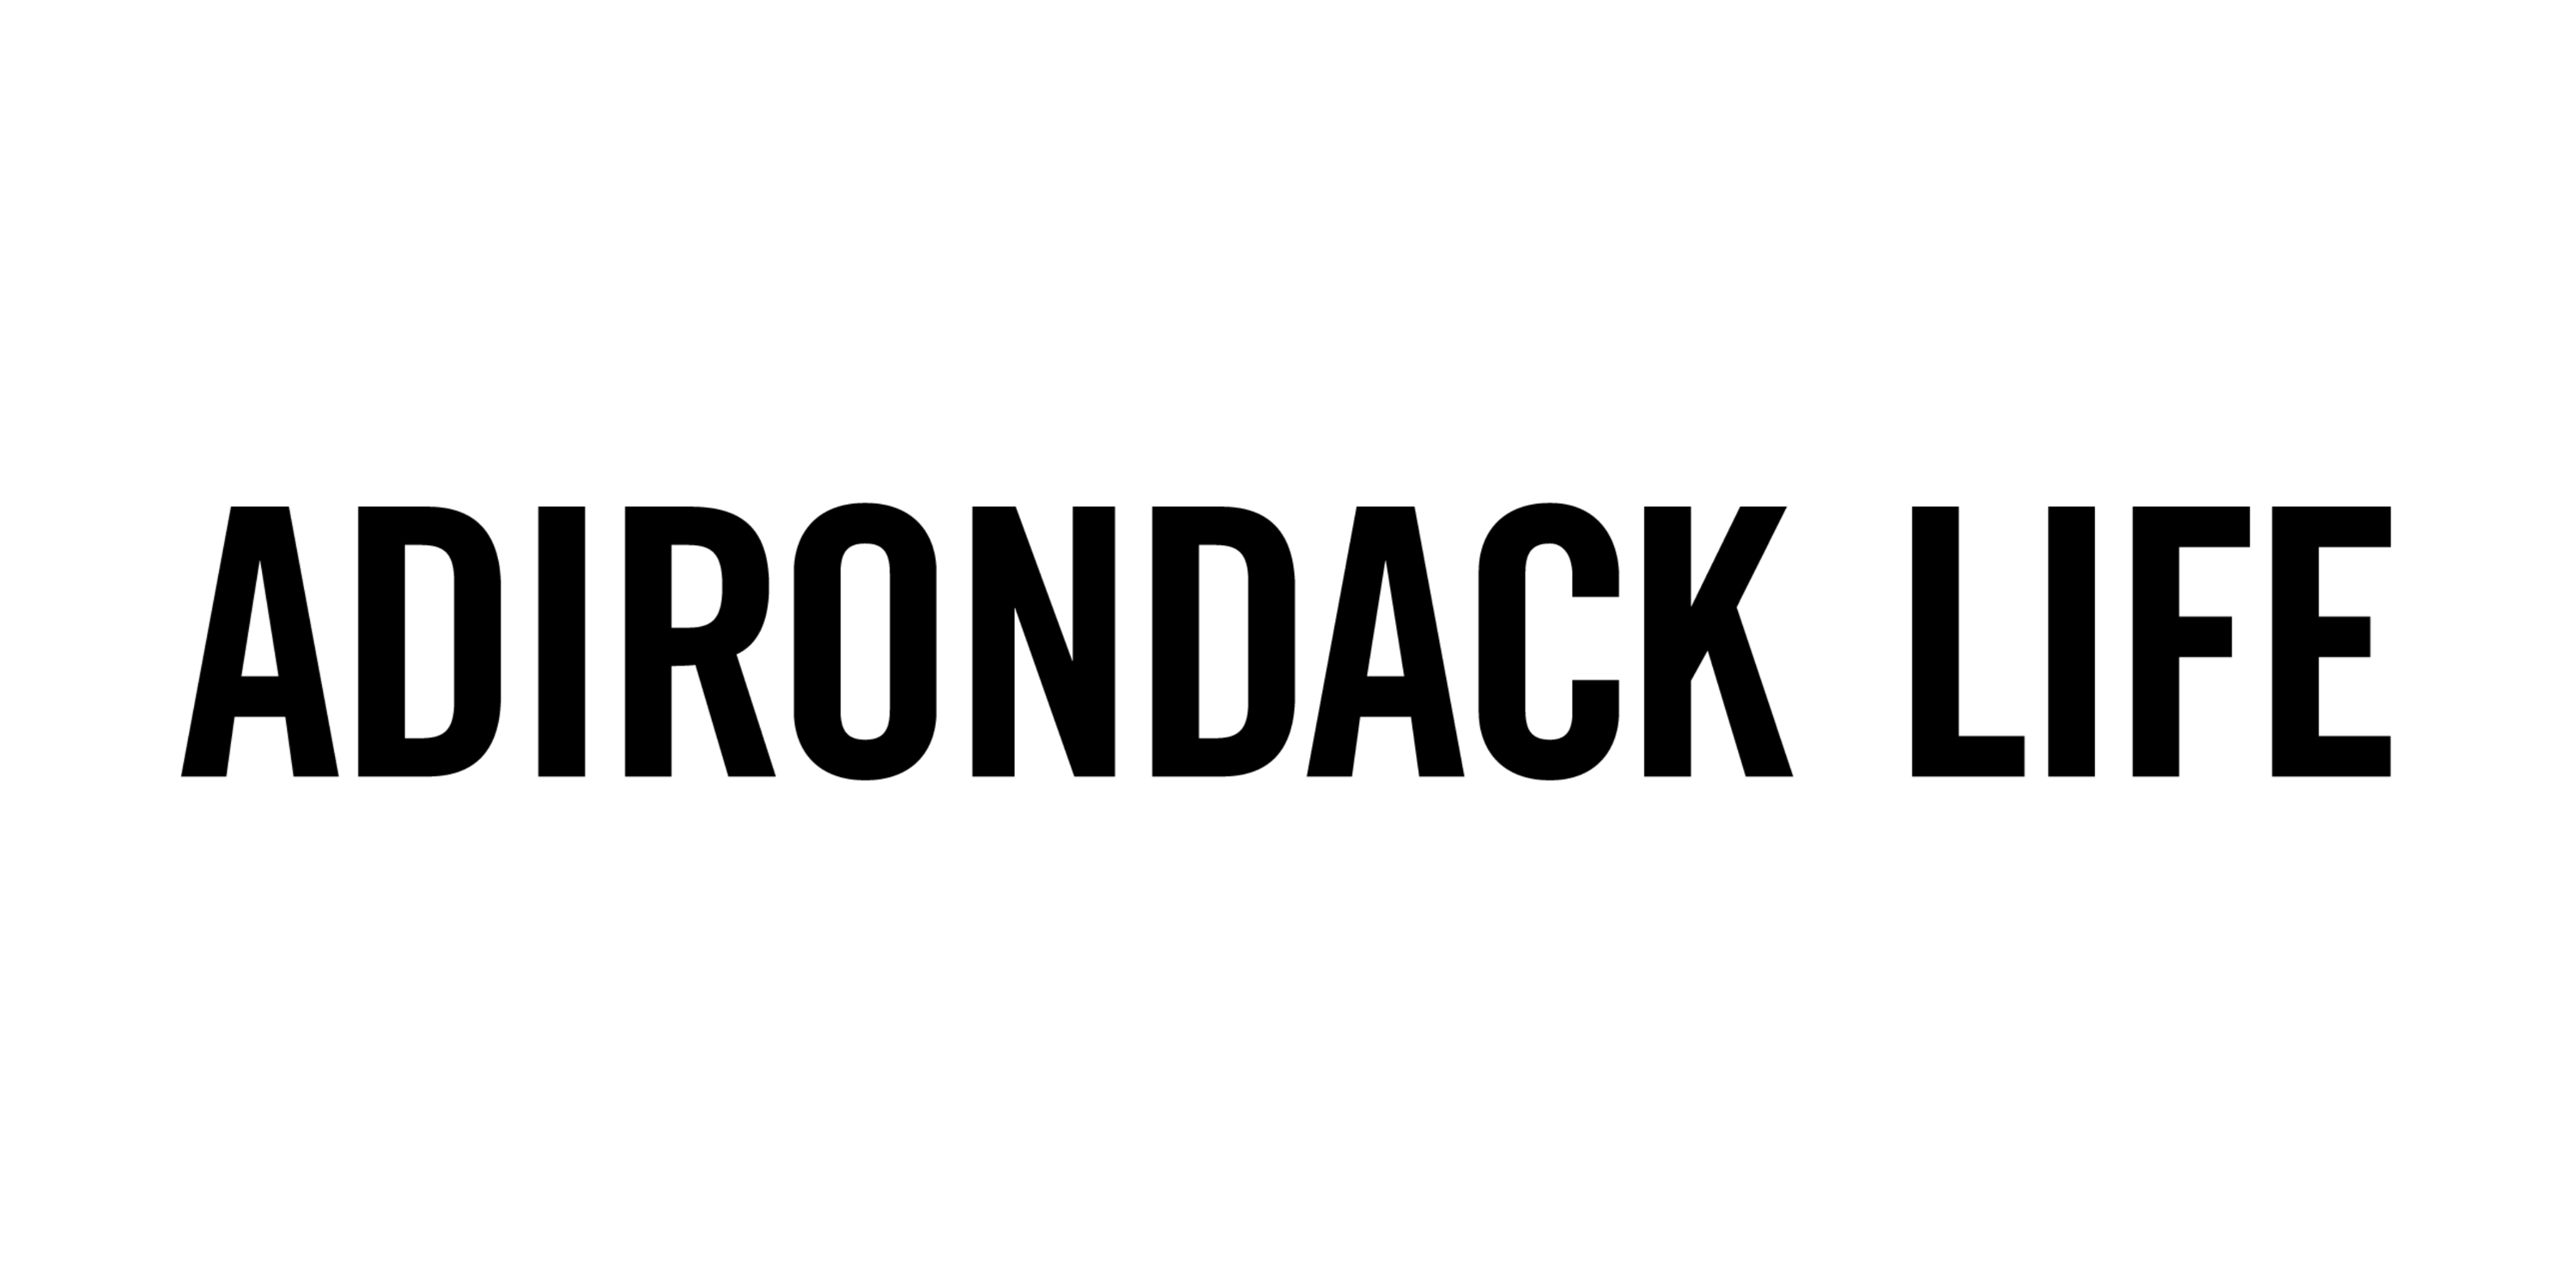 Adirondack Life Logo for article written about Birch Boys Inc